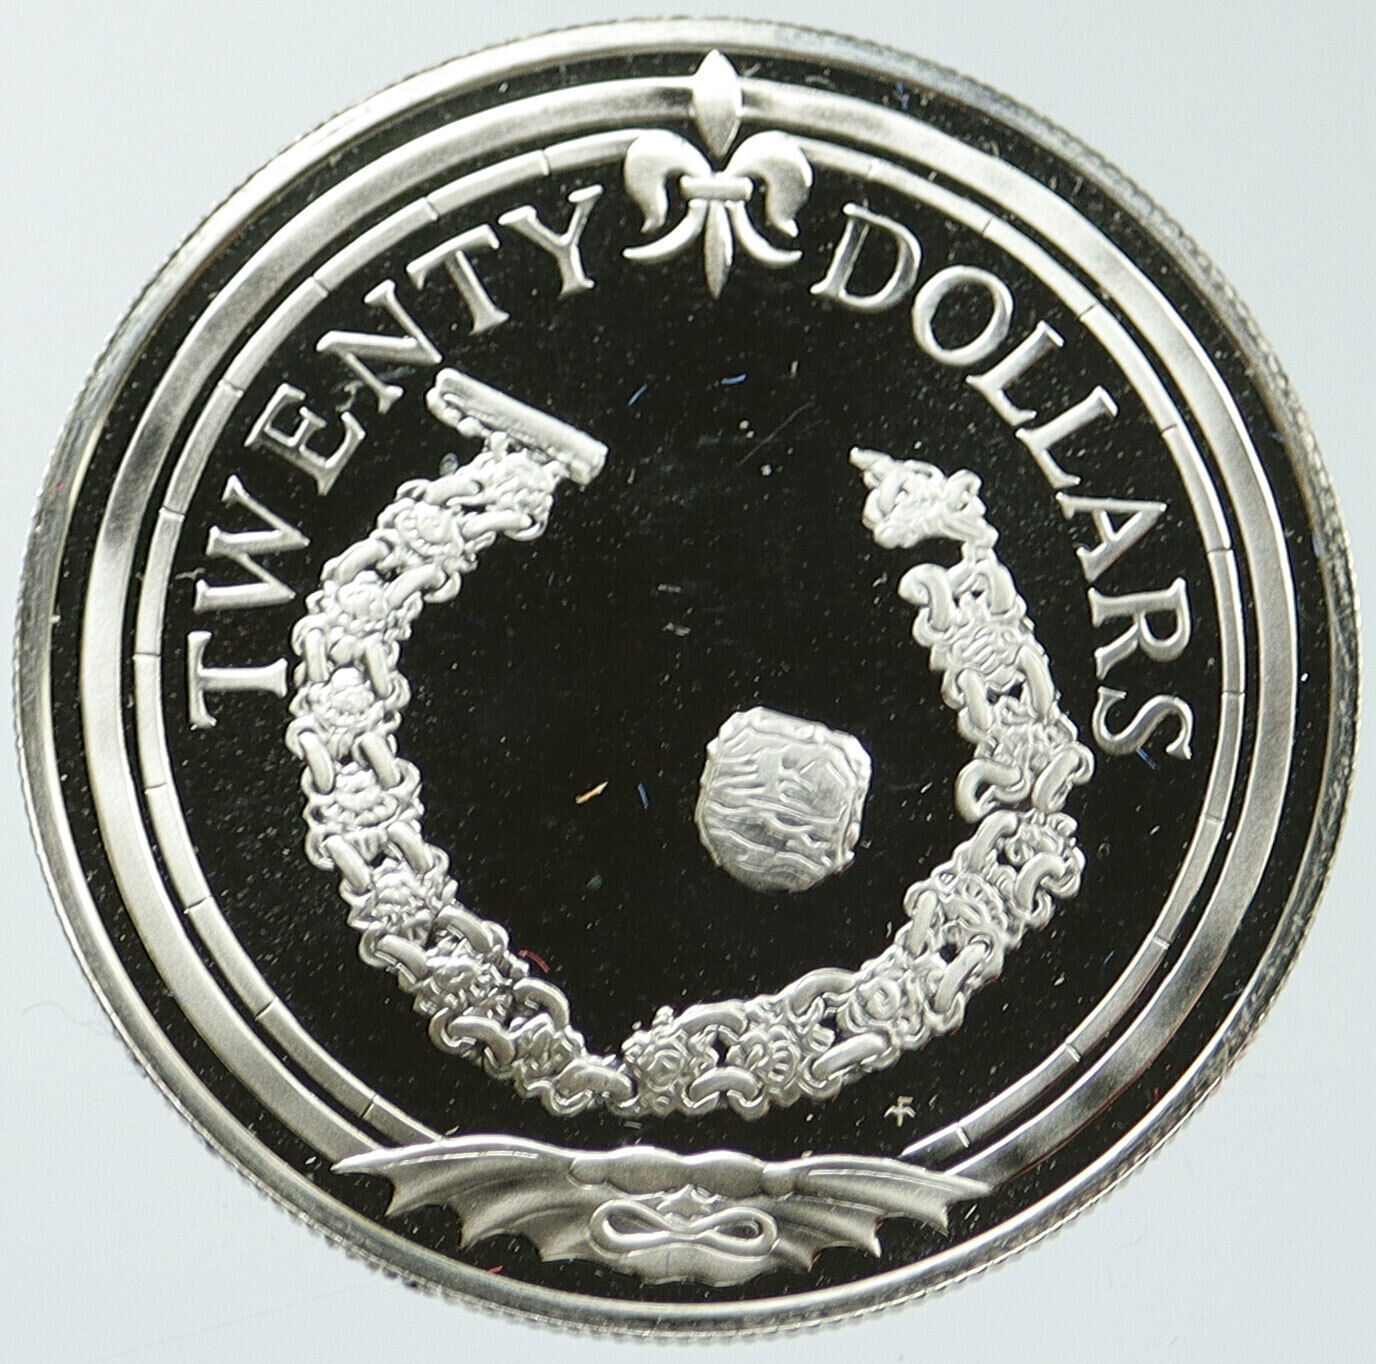 1985 British Virgin Islands TREASURE Pocket Watch Proof Silver $20 Coin i116866